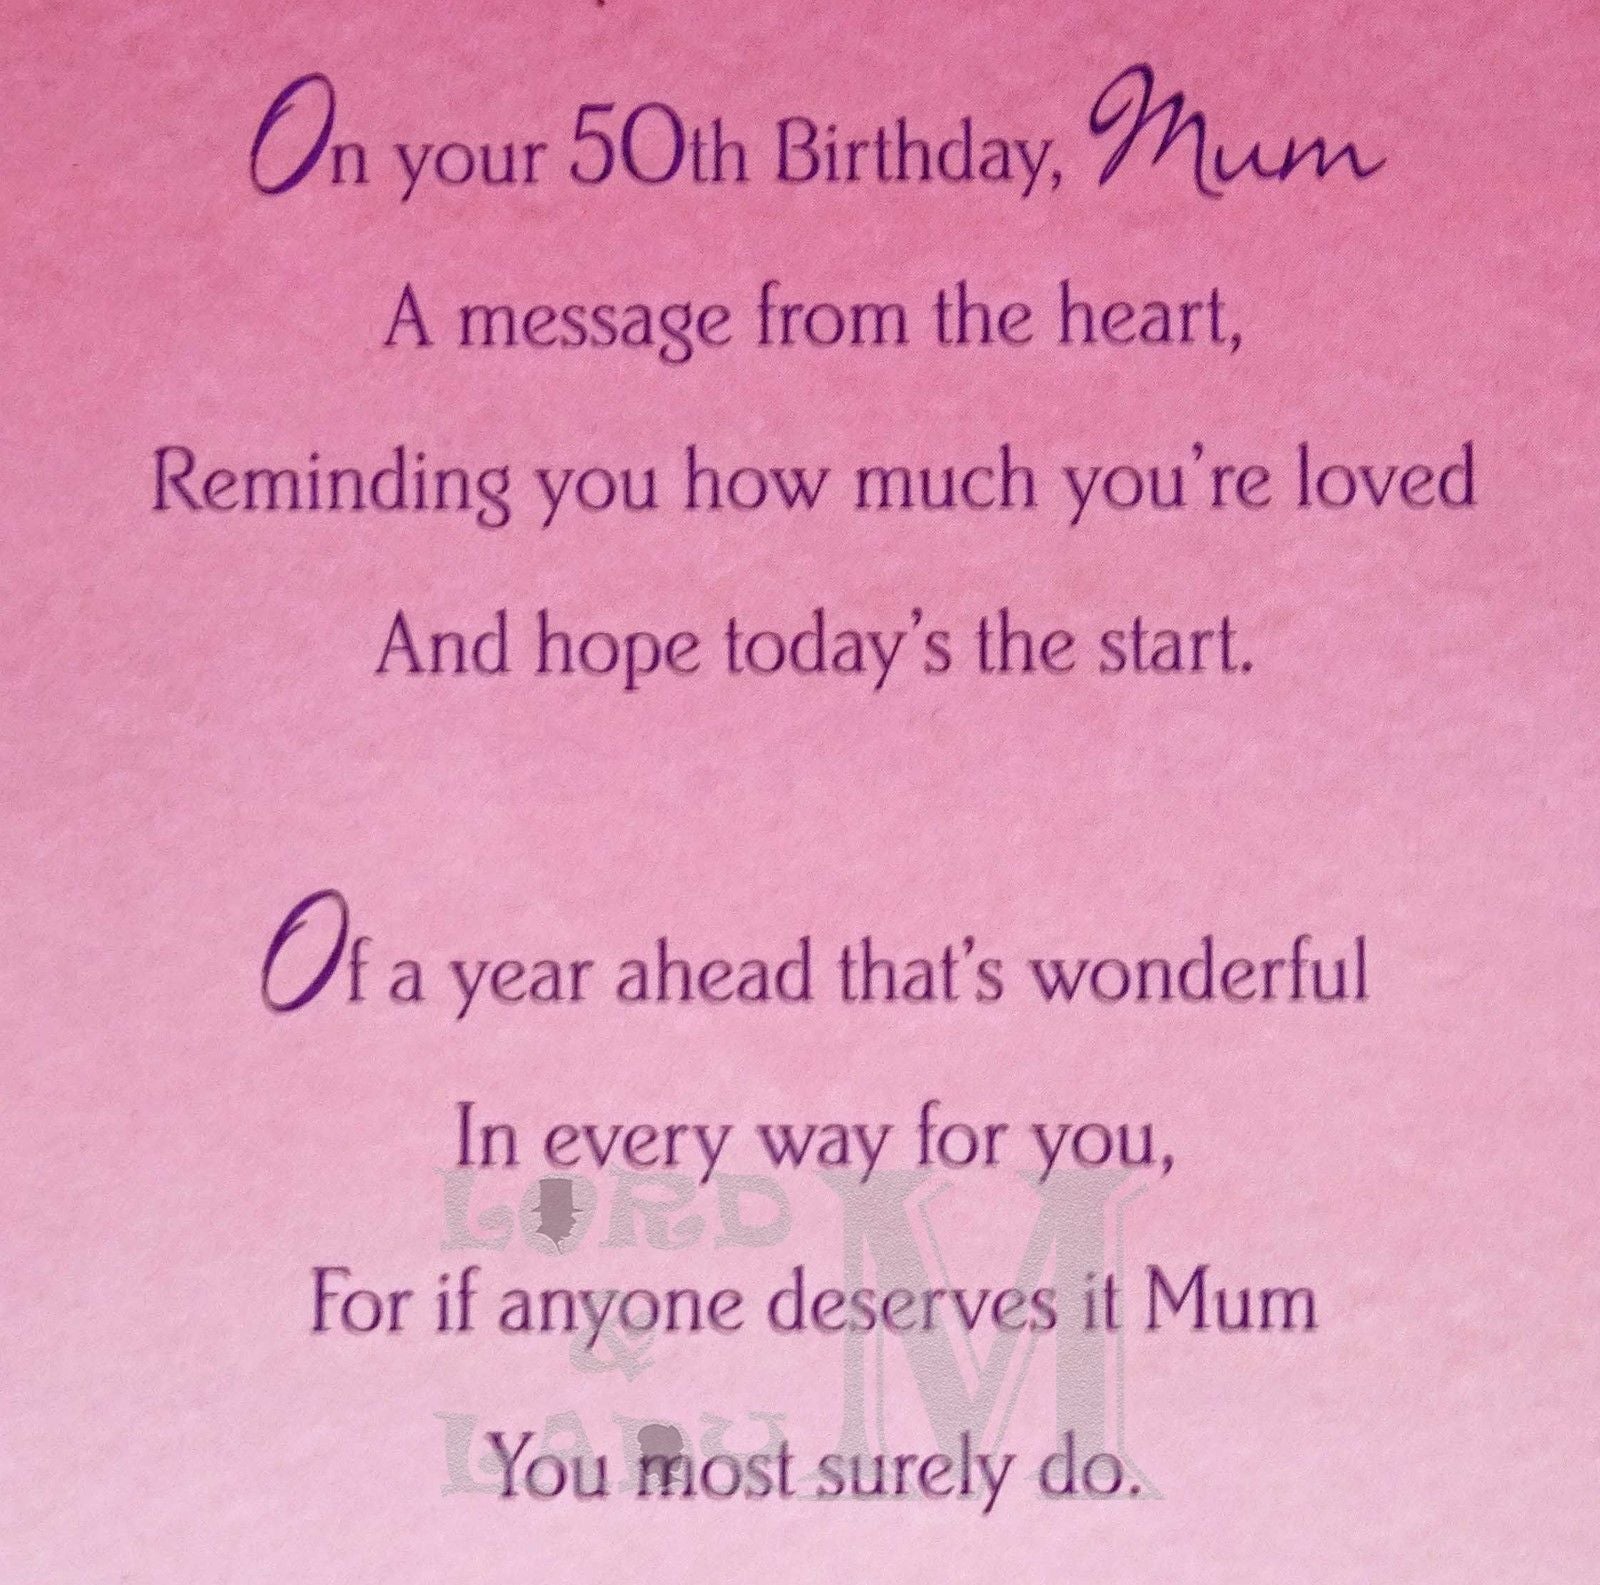 23cm - With Love Mum On Your Birthday 50